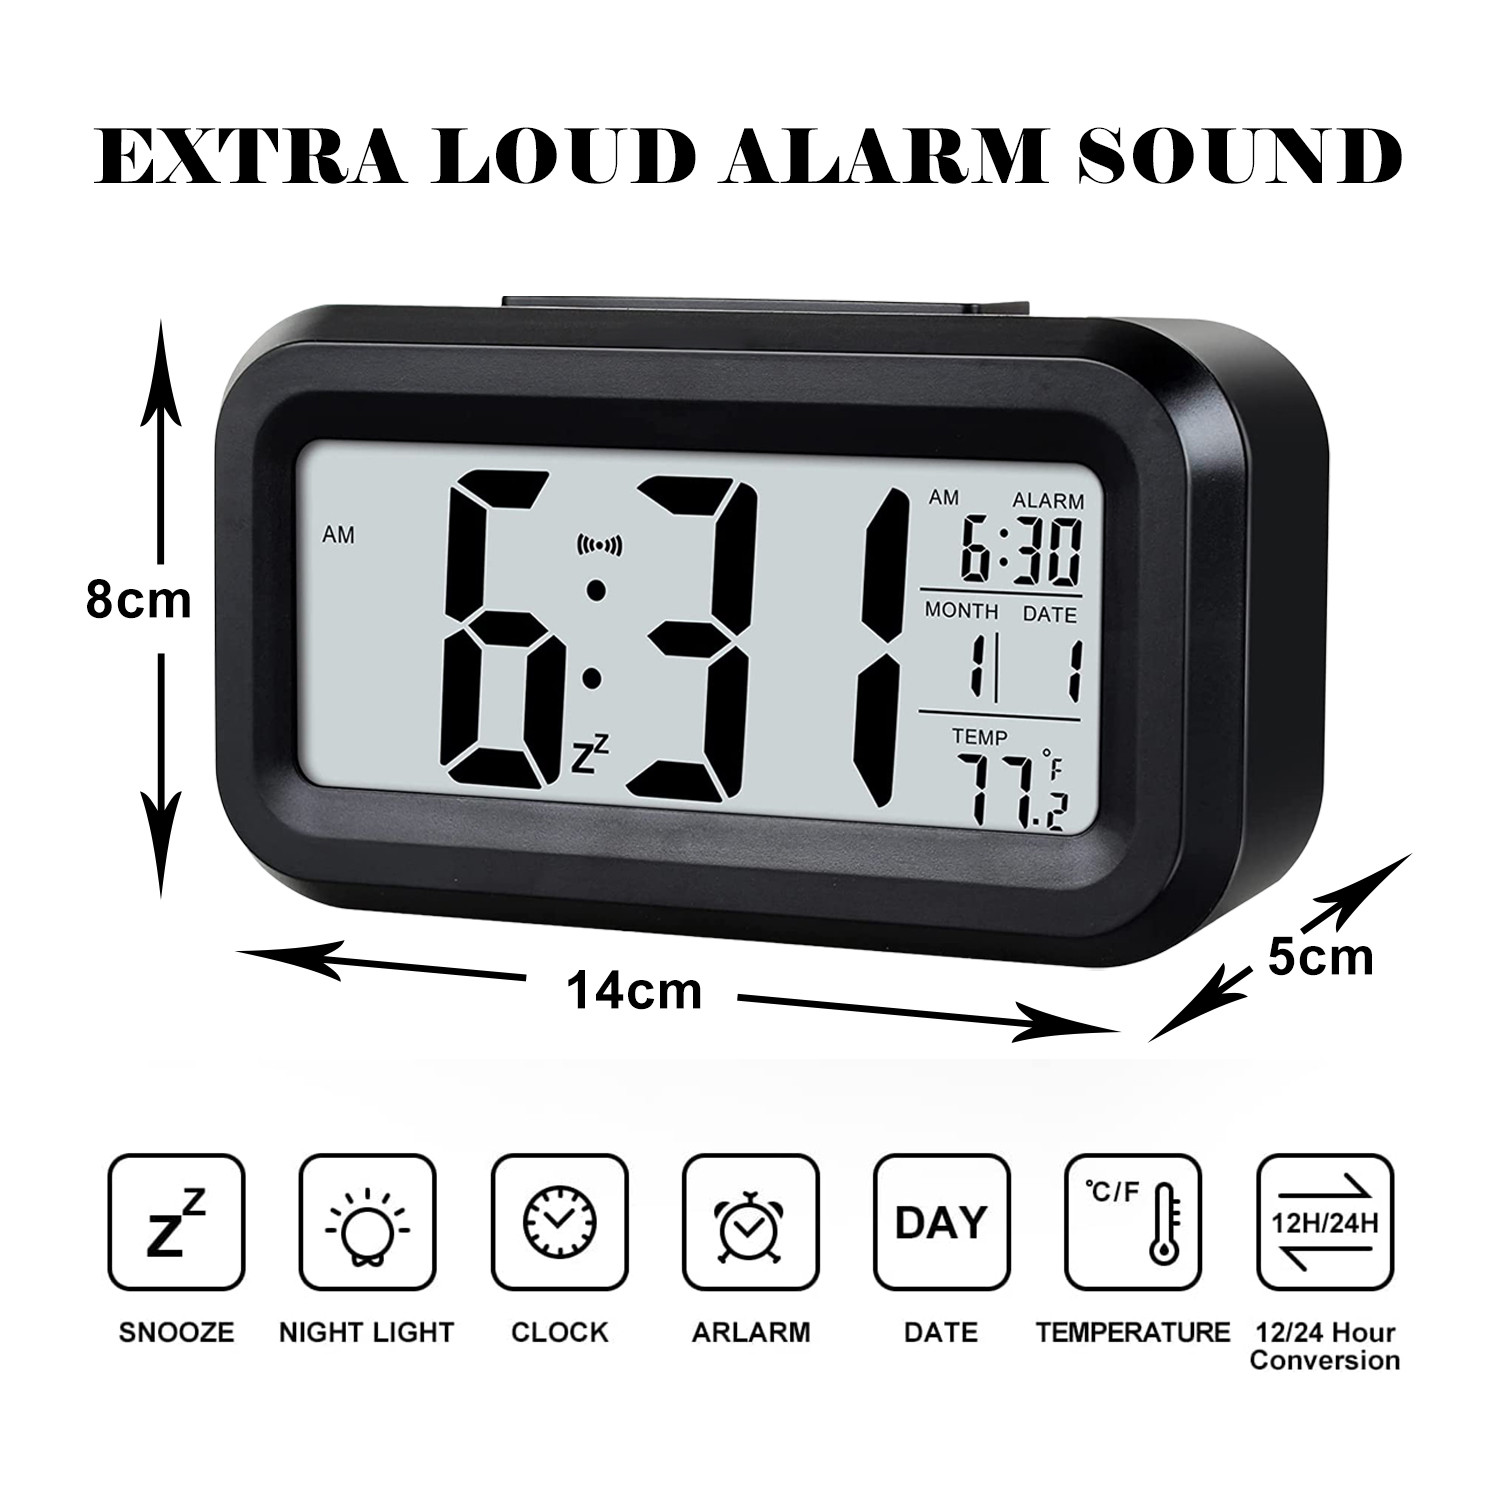 Kuber Industries Digital Alarm Clock | Plastic Table Alarm Clock | Alarm Clock for Gift | Alarm Clock with Night LCD Display | Vintage Look Alarm Clock | Battery Operated |Black